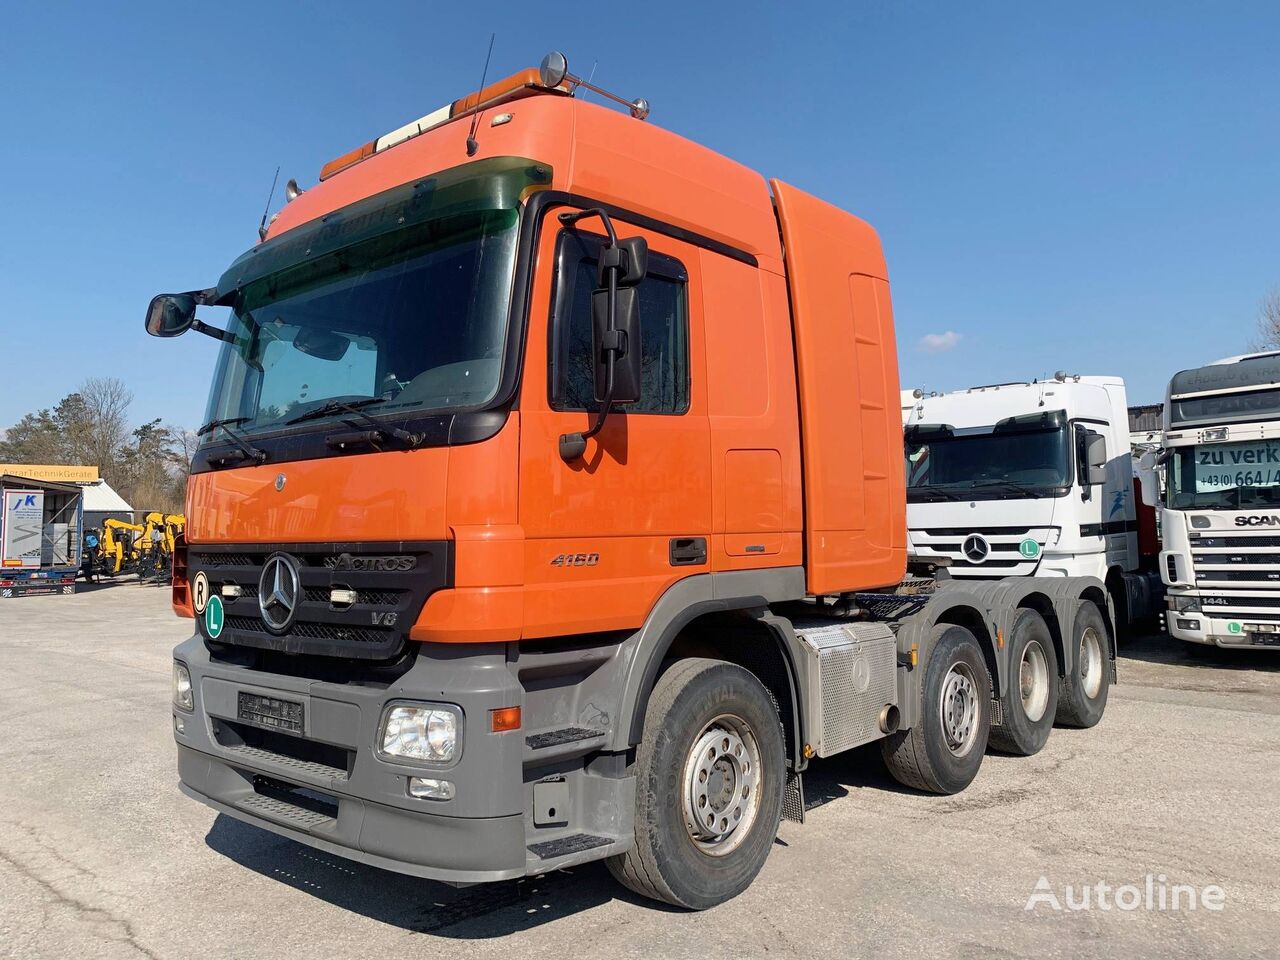 MERCEDES-BENZ ACTROS 4160 S 8x4/4 WSK *250 TONS* truck tractor